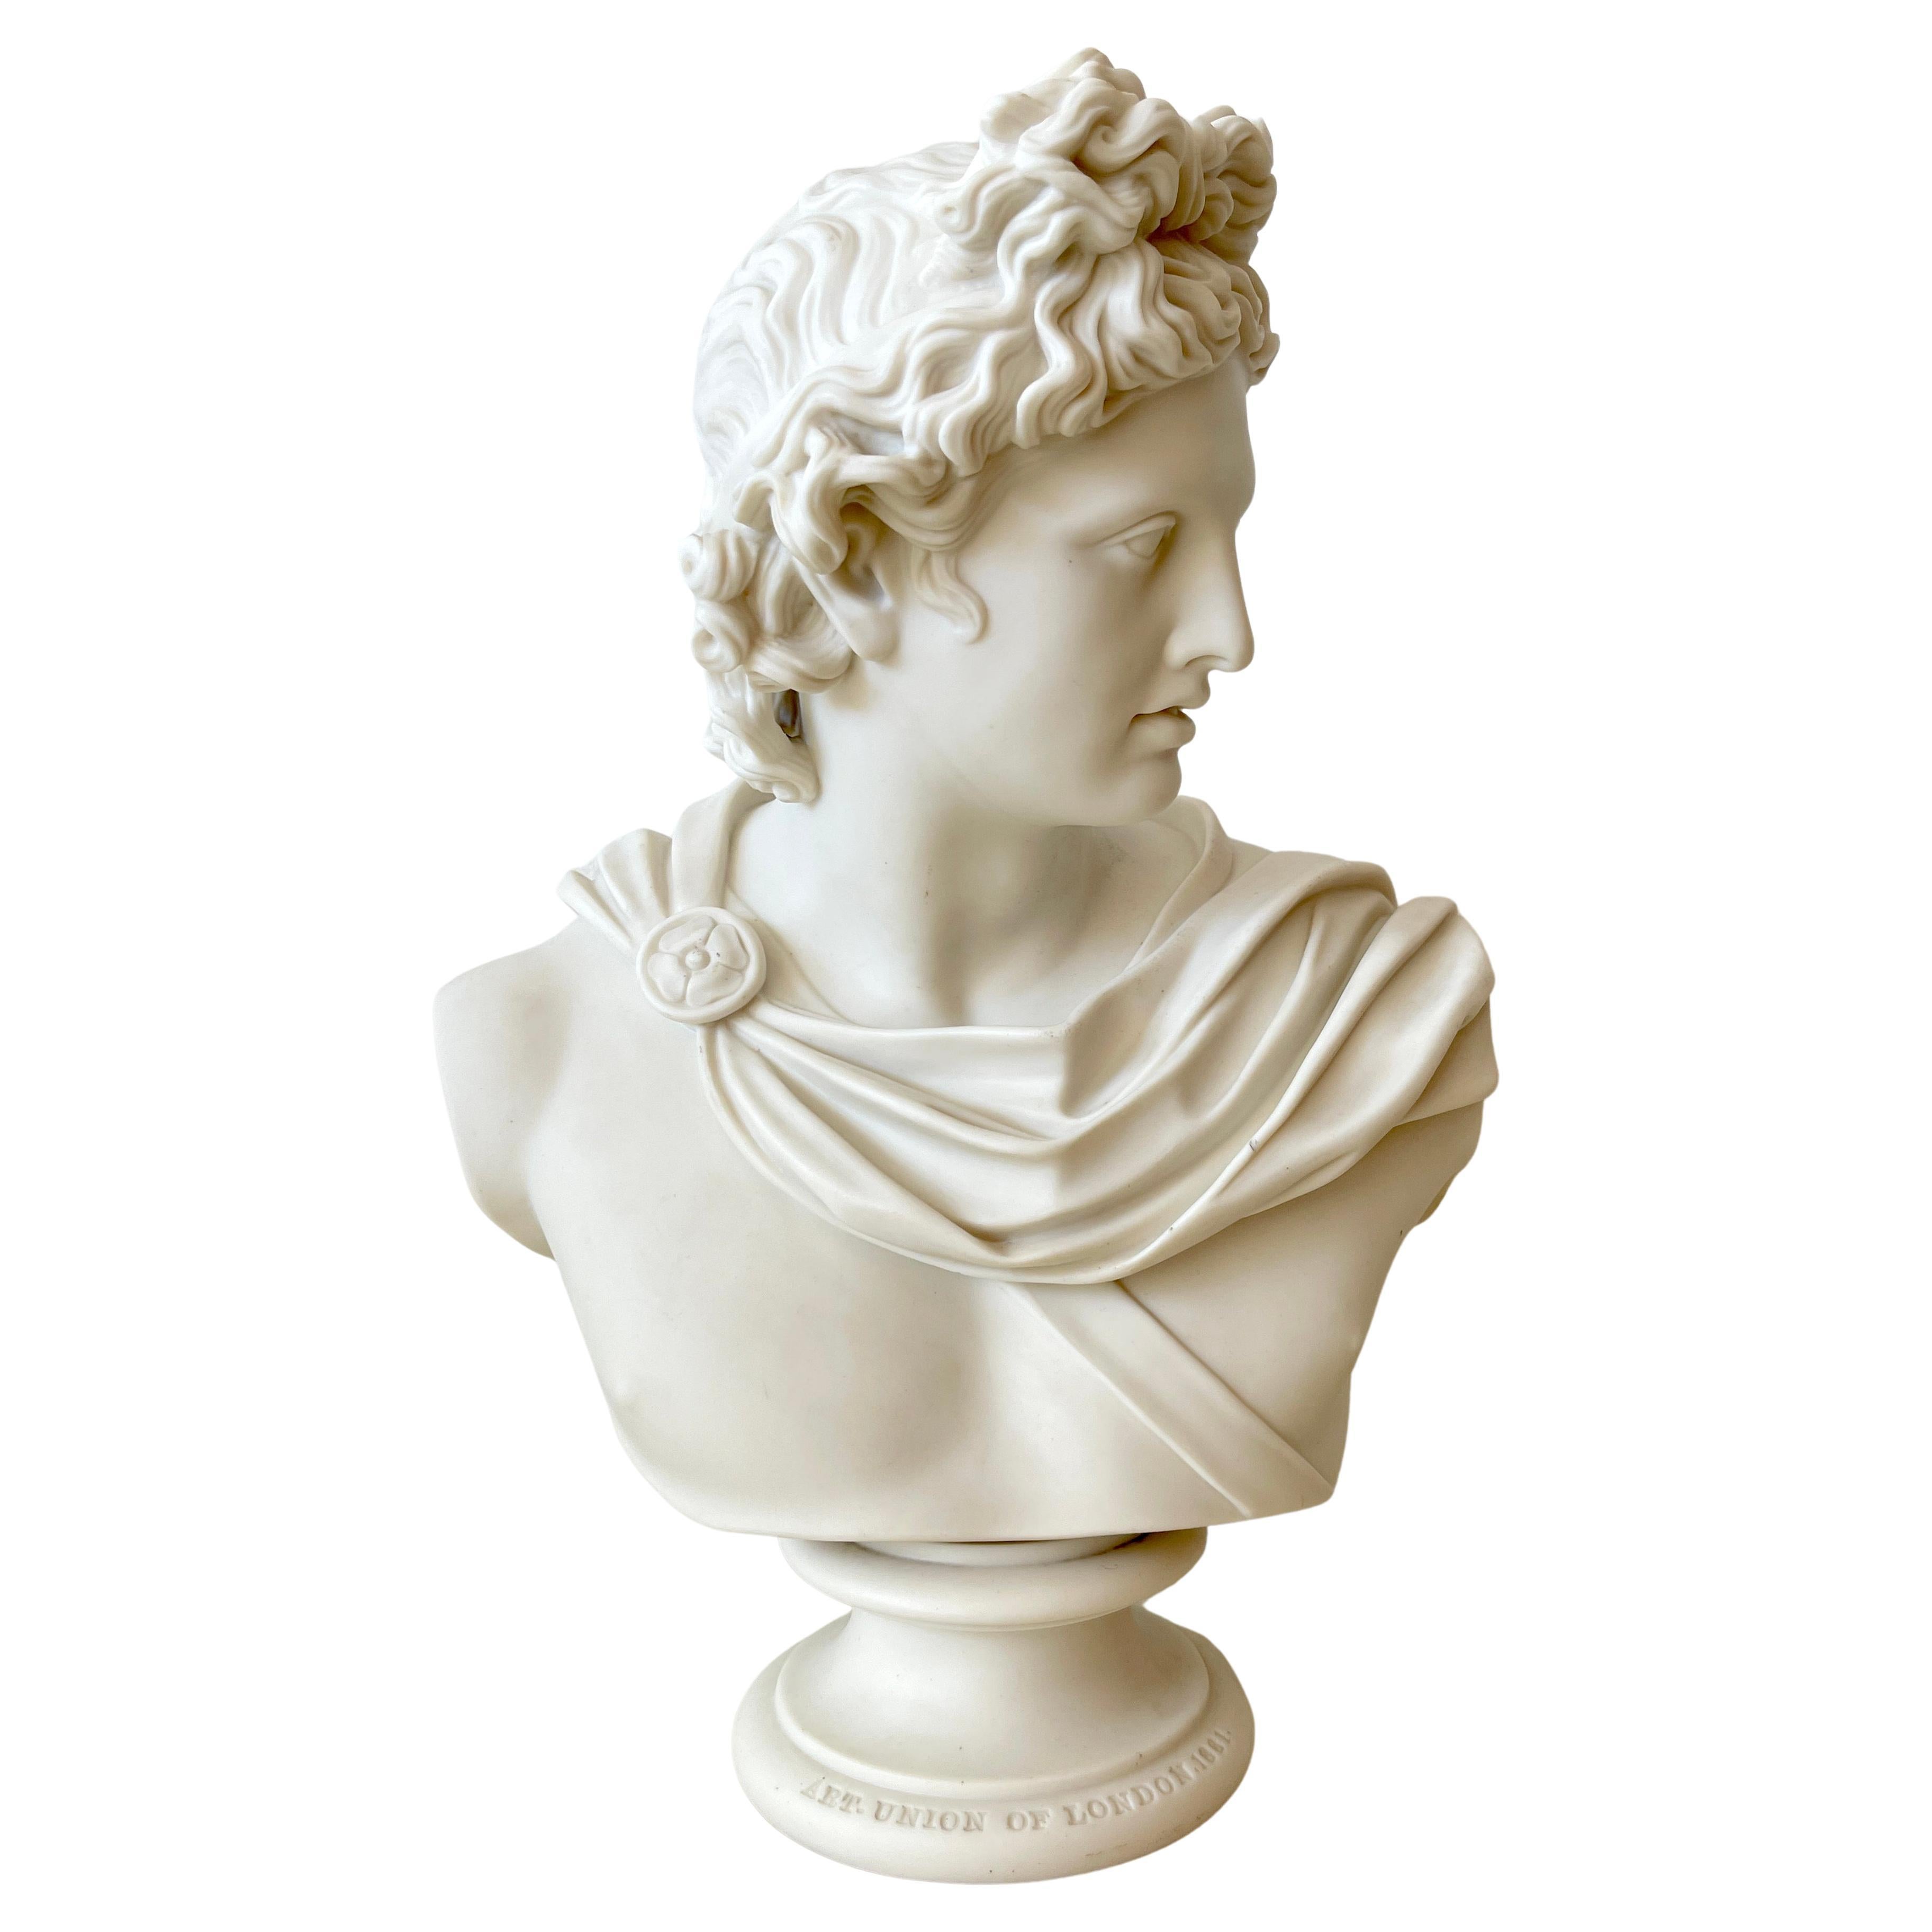 Art Union of London Parian Bust of Apollo Belvedere, by C. Delpech, 1861